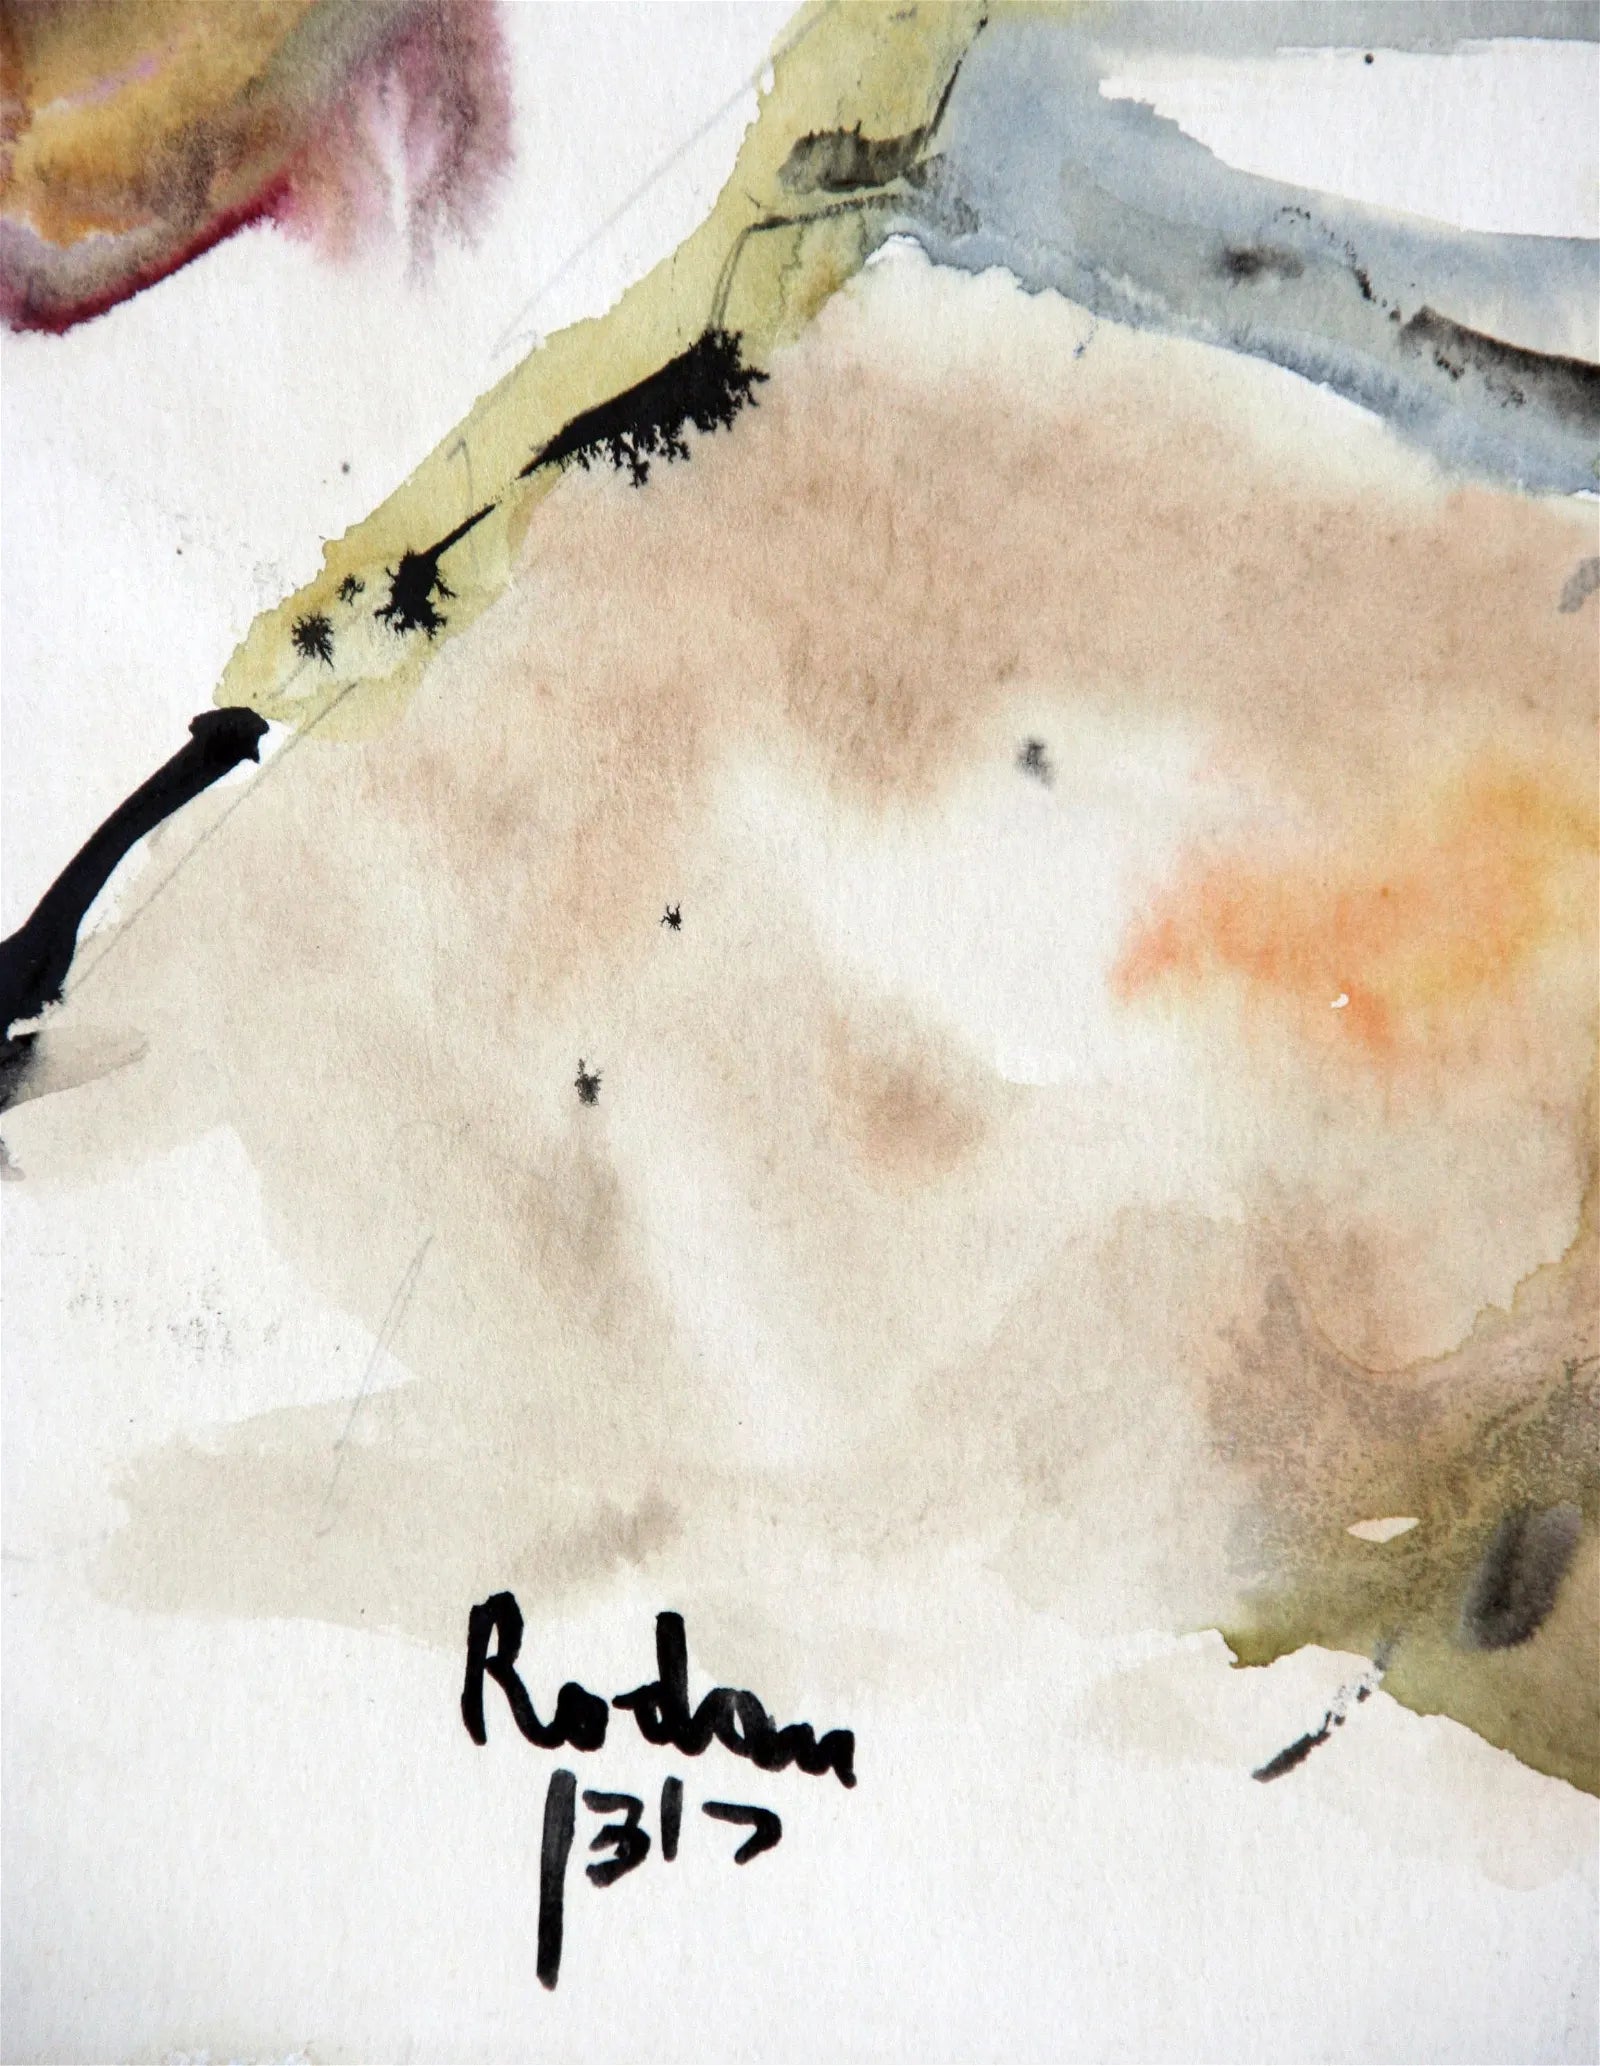 AW3-020: Jehuda Rodan - Late 20th Century - "Passage Way” -  Watercolor on Paper